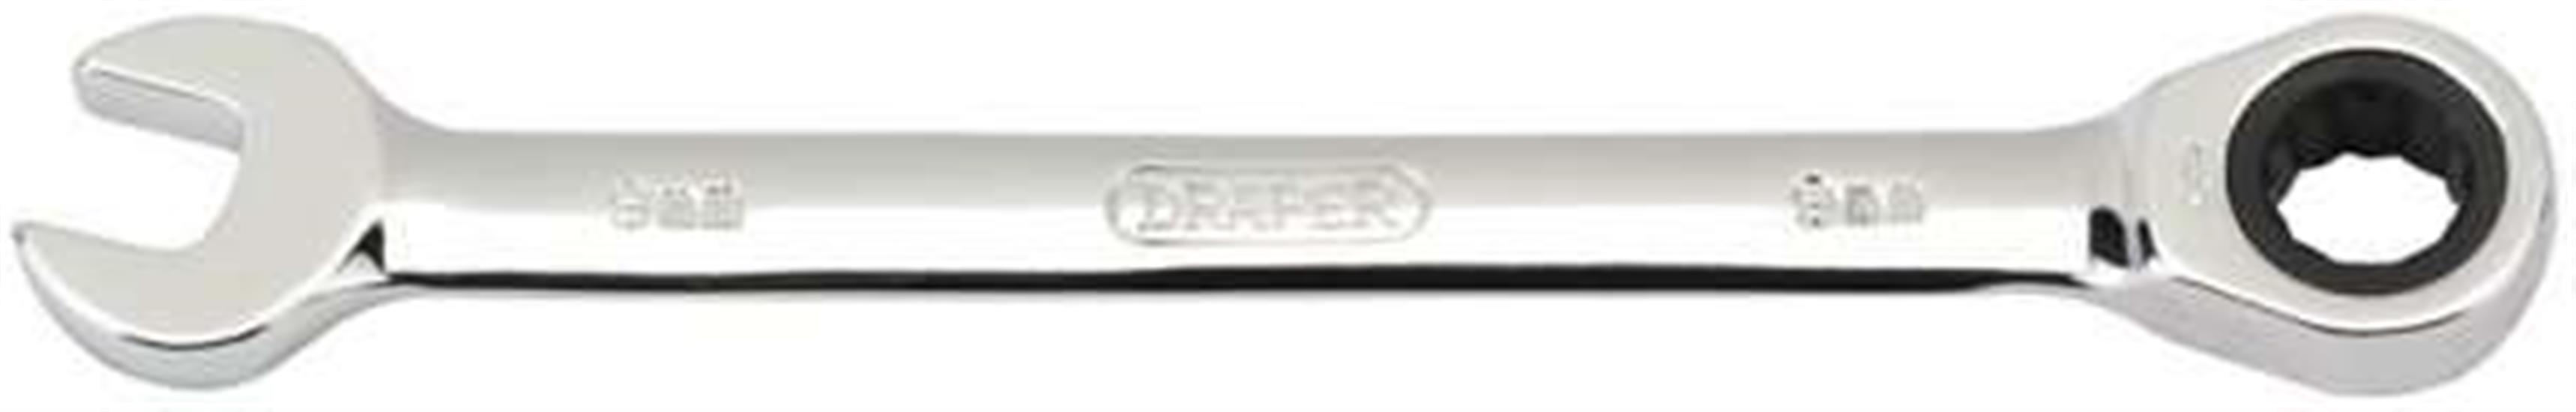 Draper 31006 �MM) - Hi-Torq® 9mm Metric Ratcheting Combination Spanner